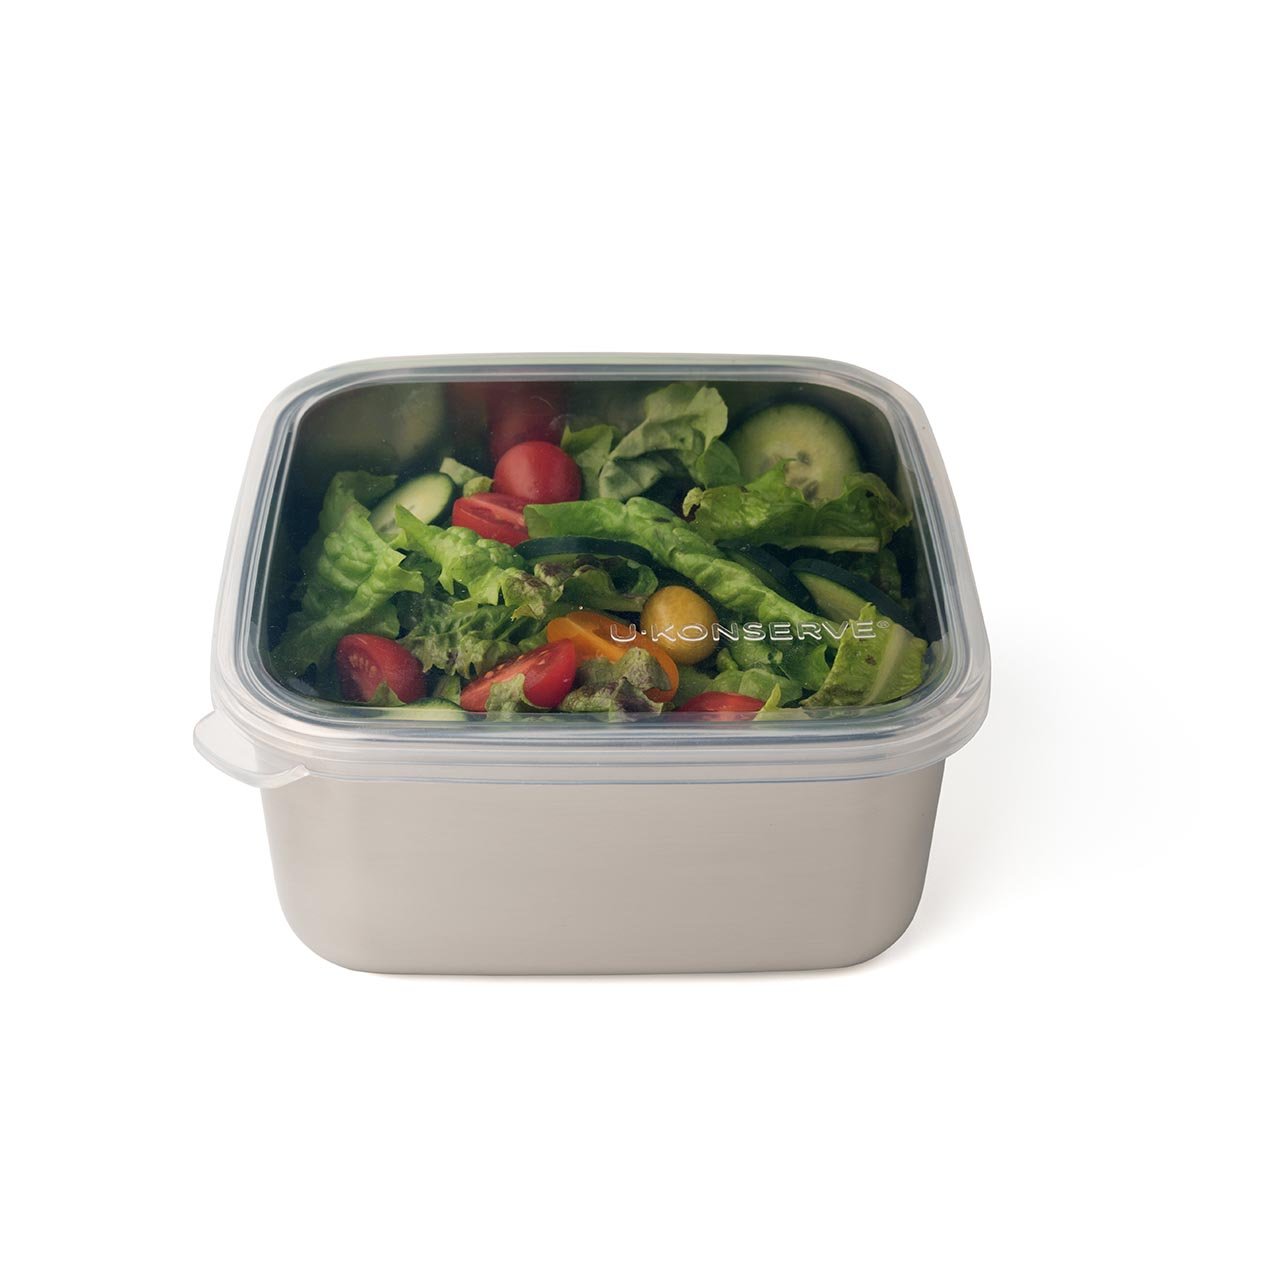 U-Konserve Stainless Steel Rectangle Food Storage Bento Box Container, Leak Proof Silicone Lid Dishwasher Safe - Plastic Free, 25oz (Blue Lid)